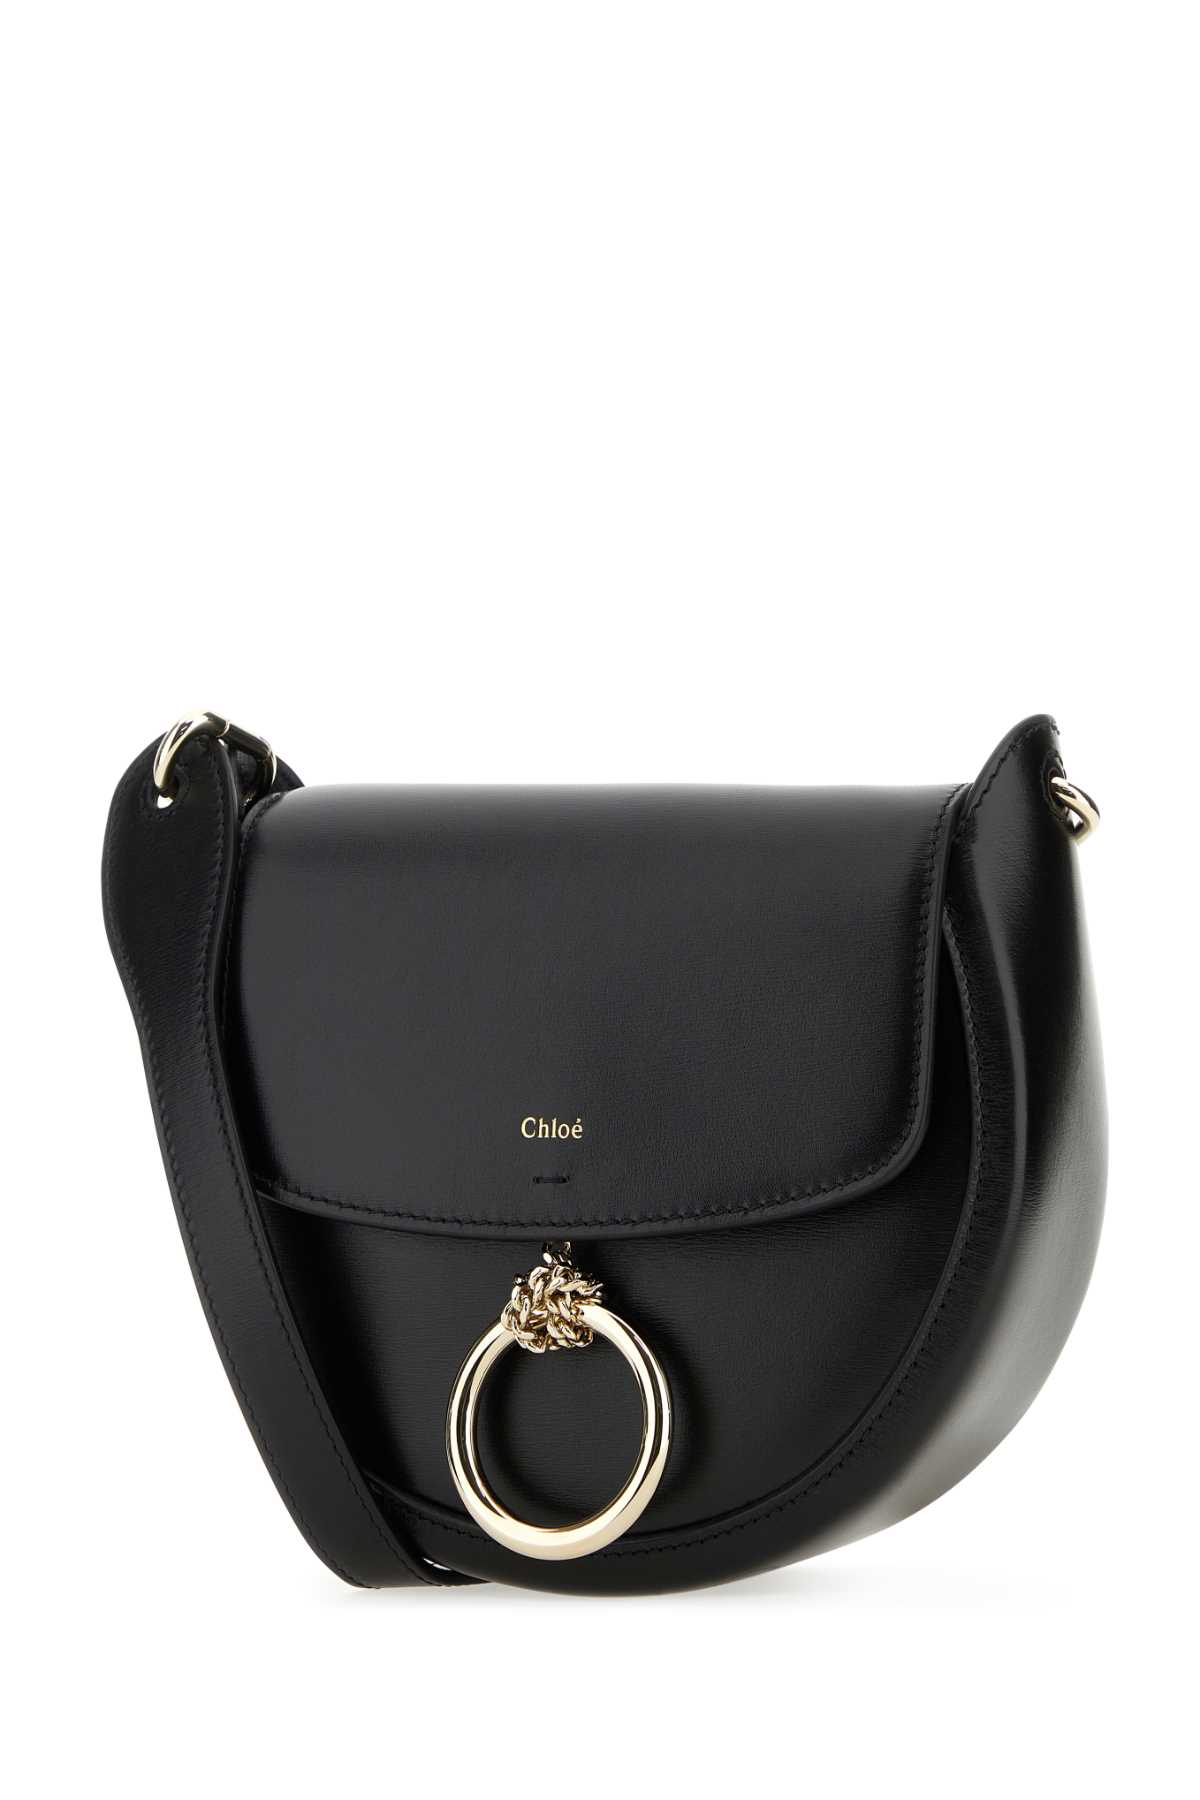 Chloé Black Leather Small Arlene Crossbody Bag